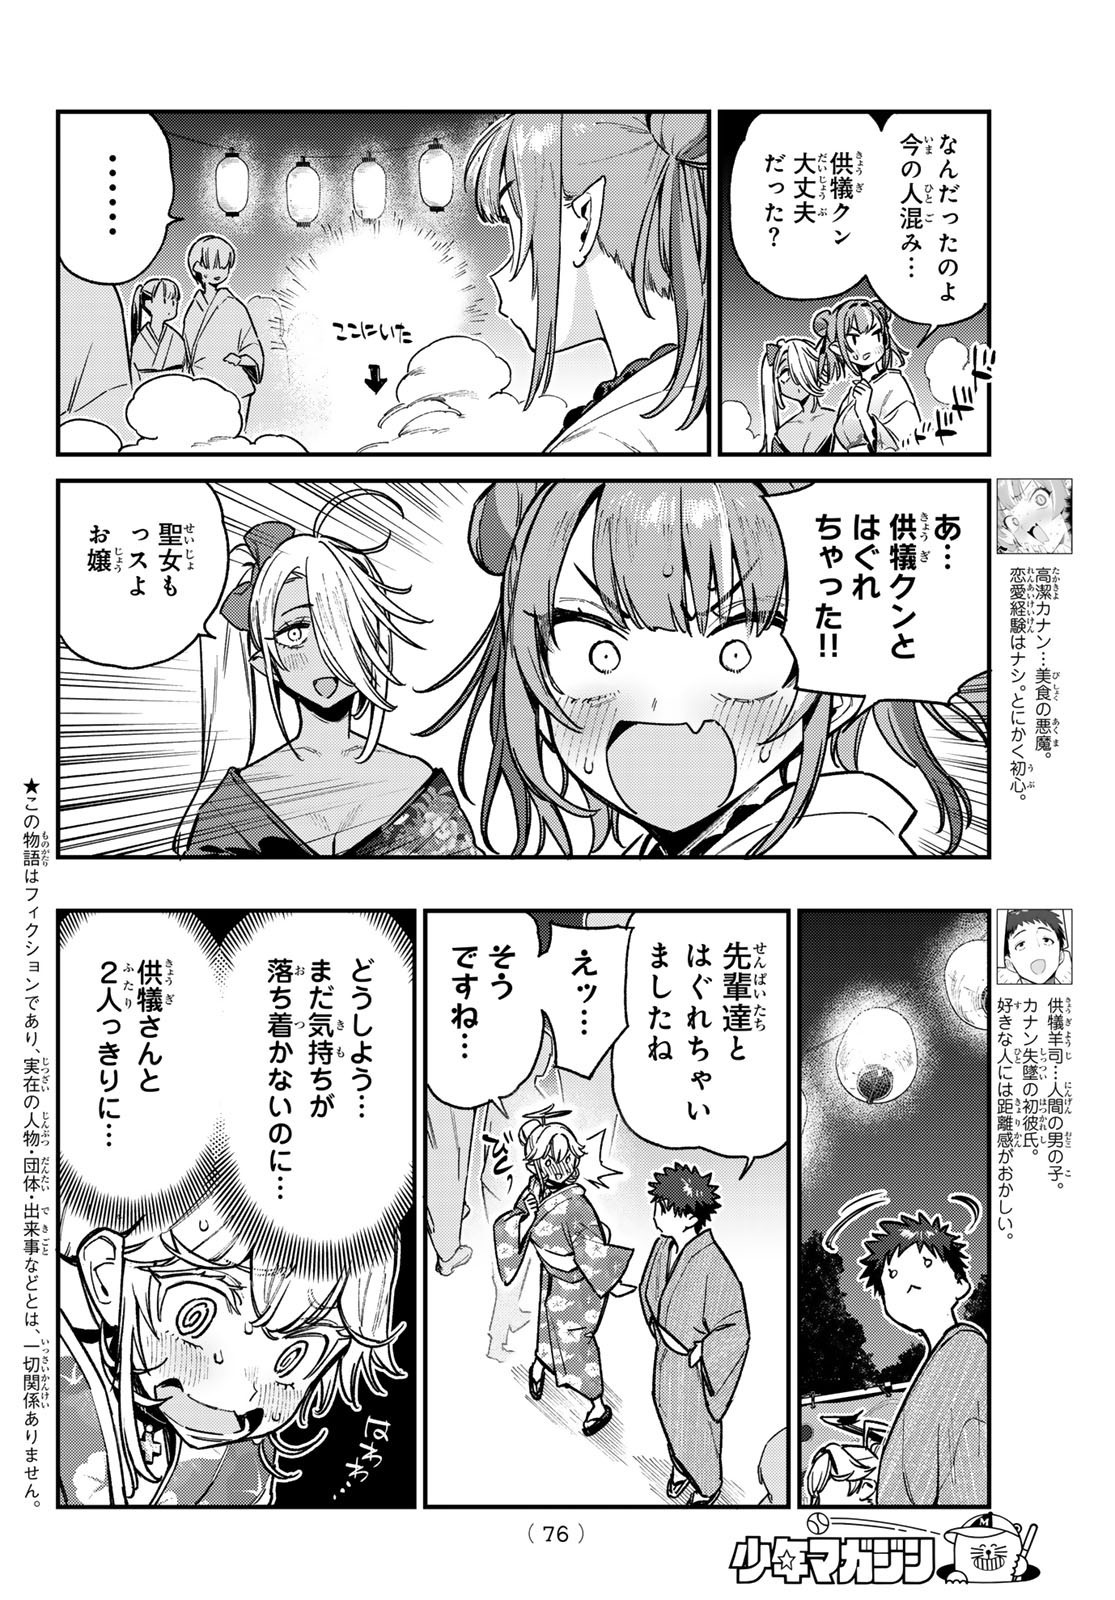 Kanan-sama wa Akumade Choroi - Chapter 068 - Page 2